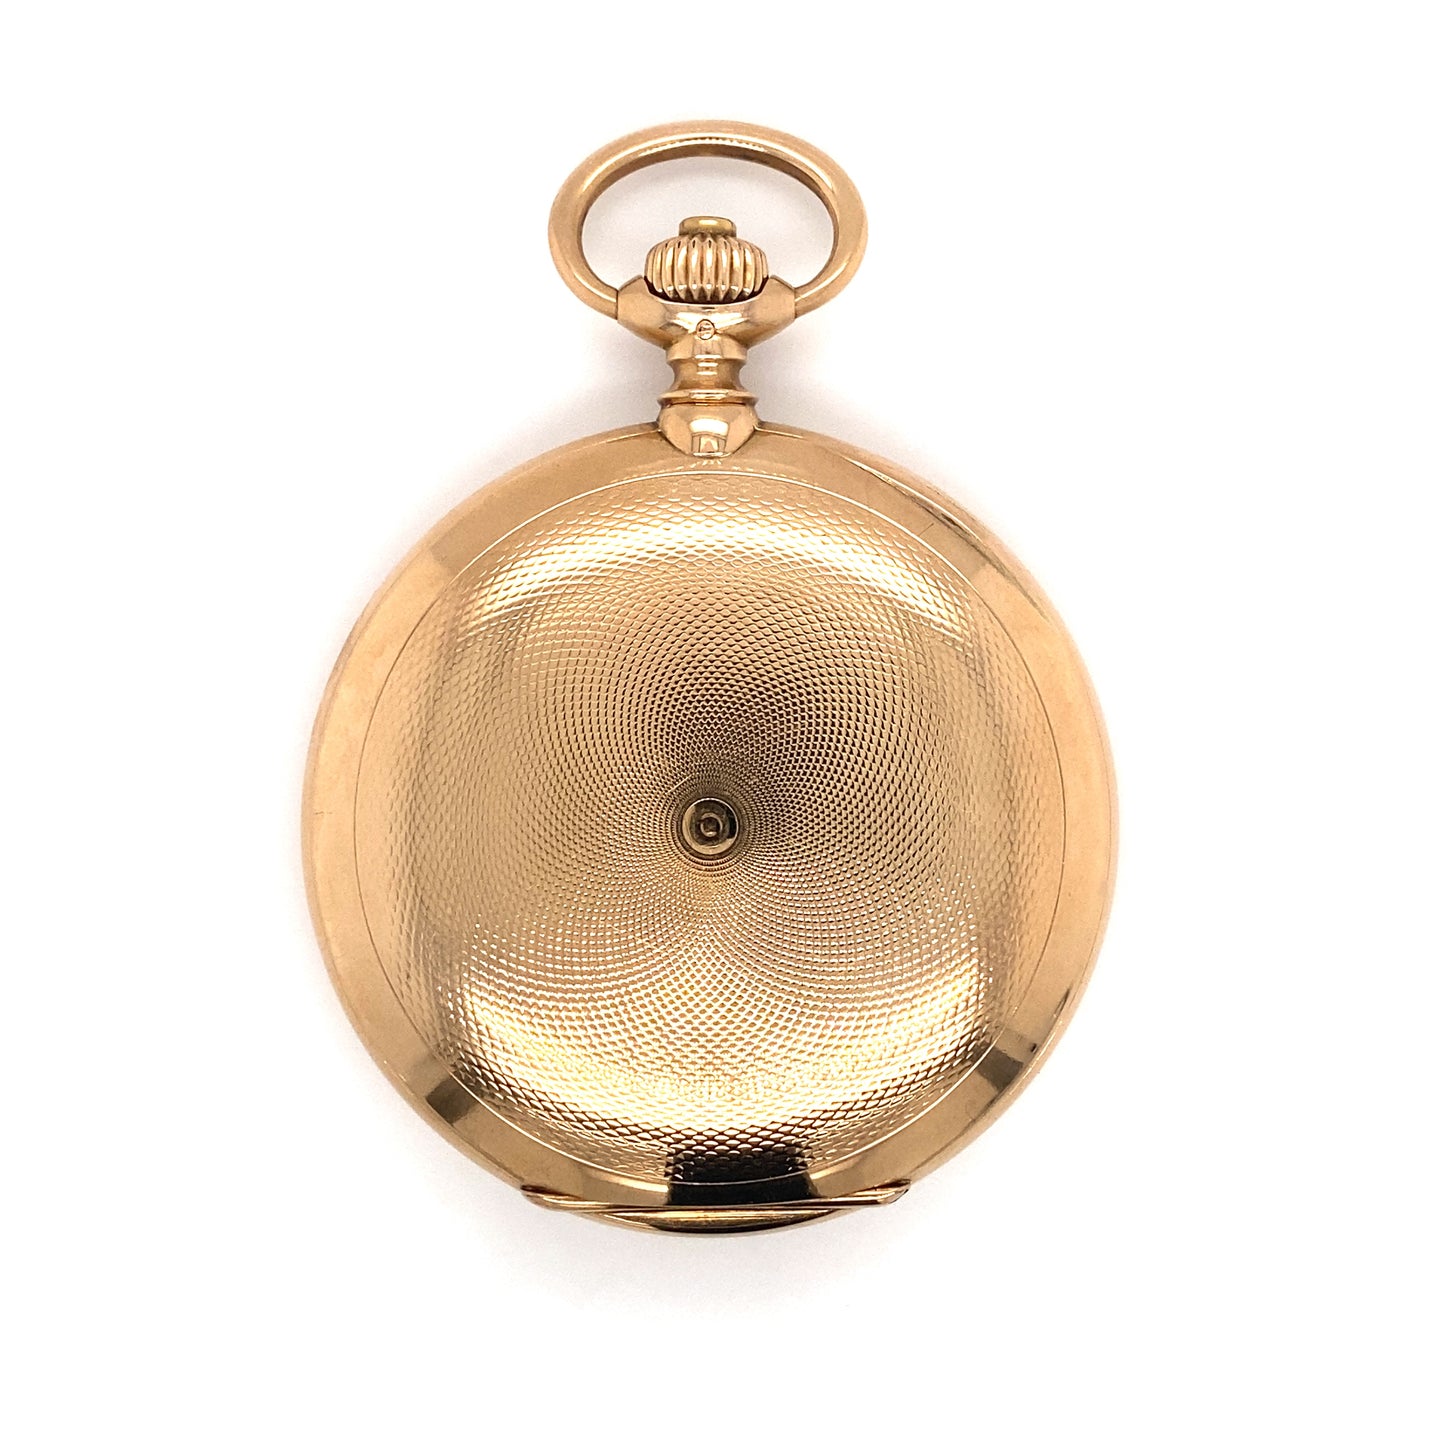 Circa 1920s A. Lange & Sohne Hunter Case Pocket Watch in 18K Gold